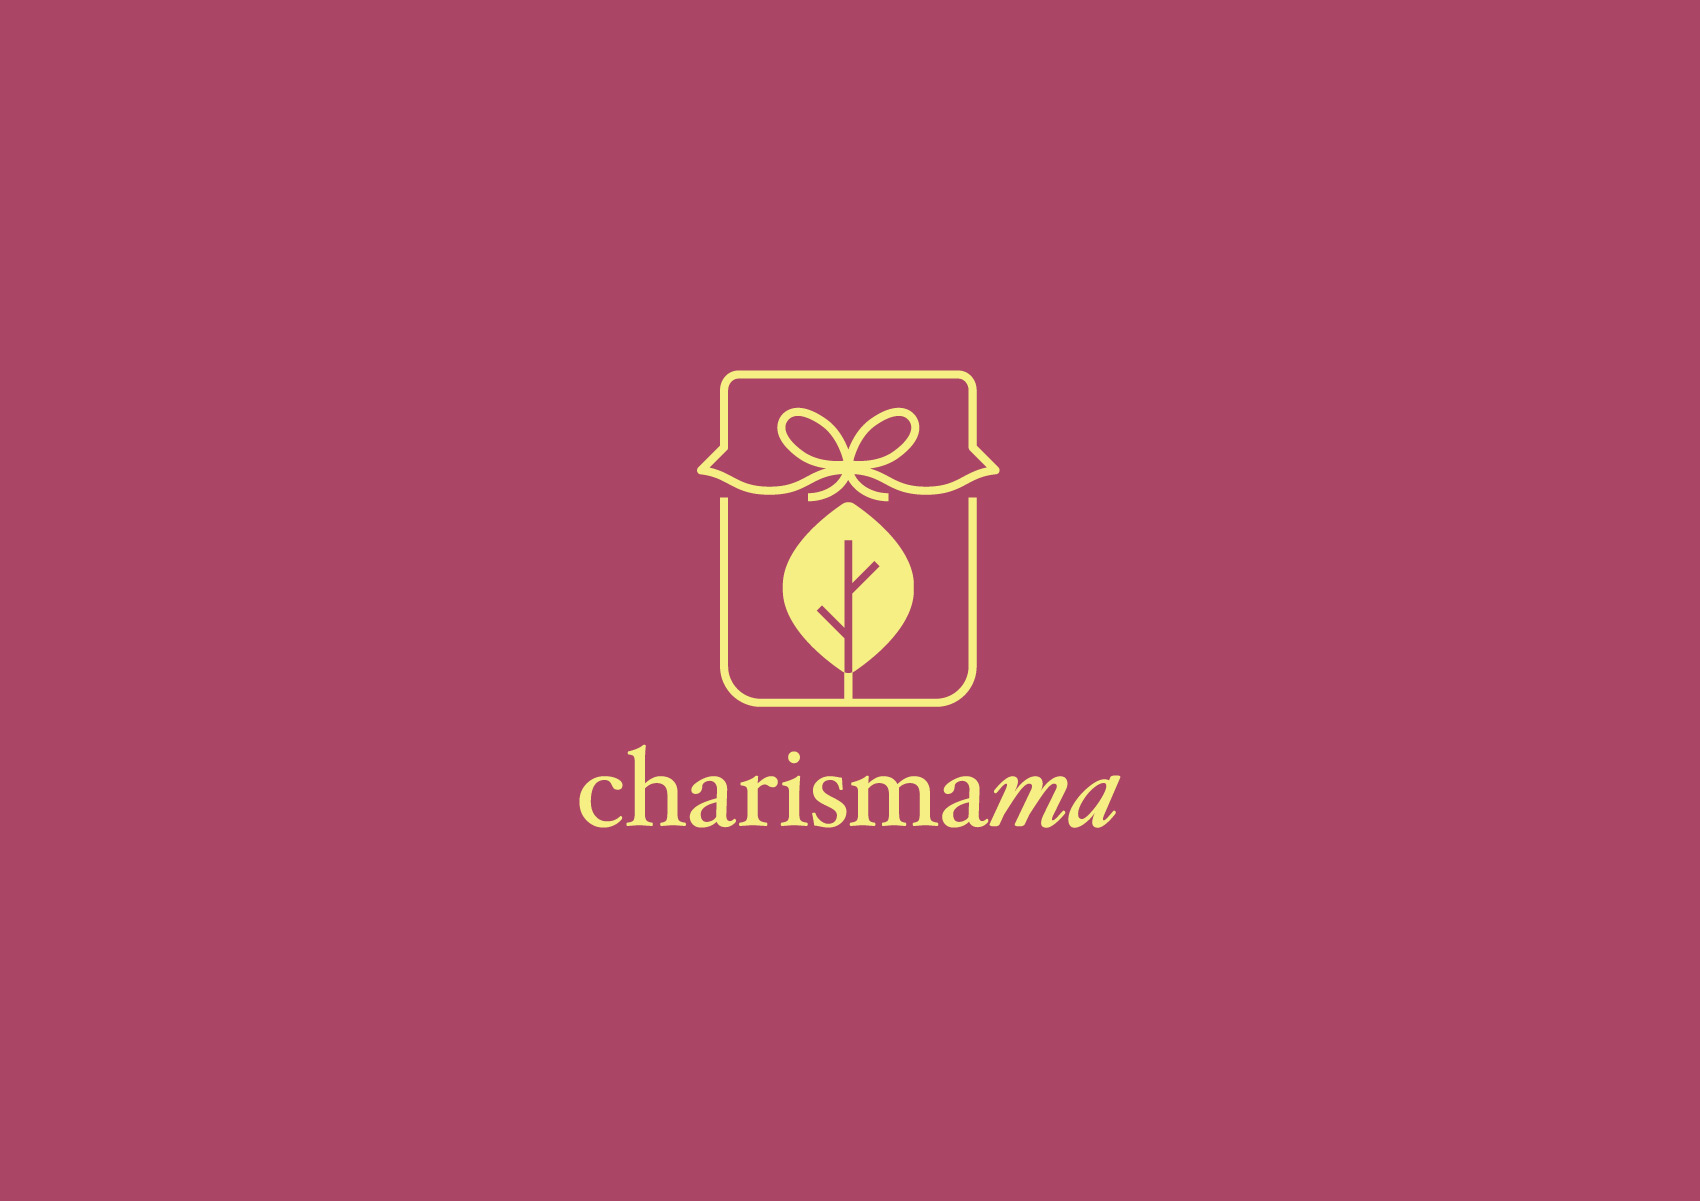 Charismama Branding and Packaging - CHP Design Studio